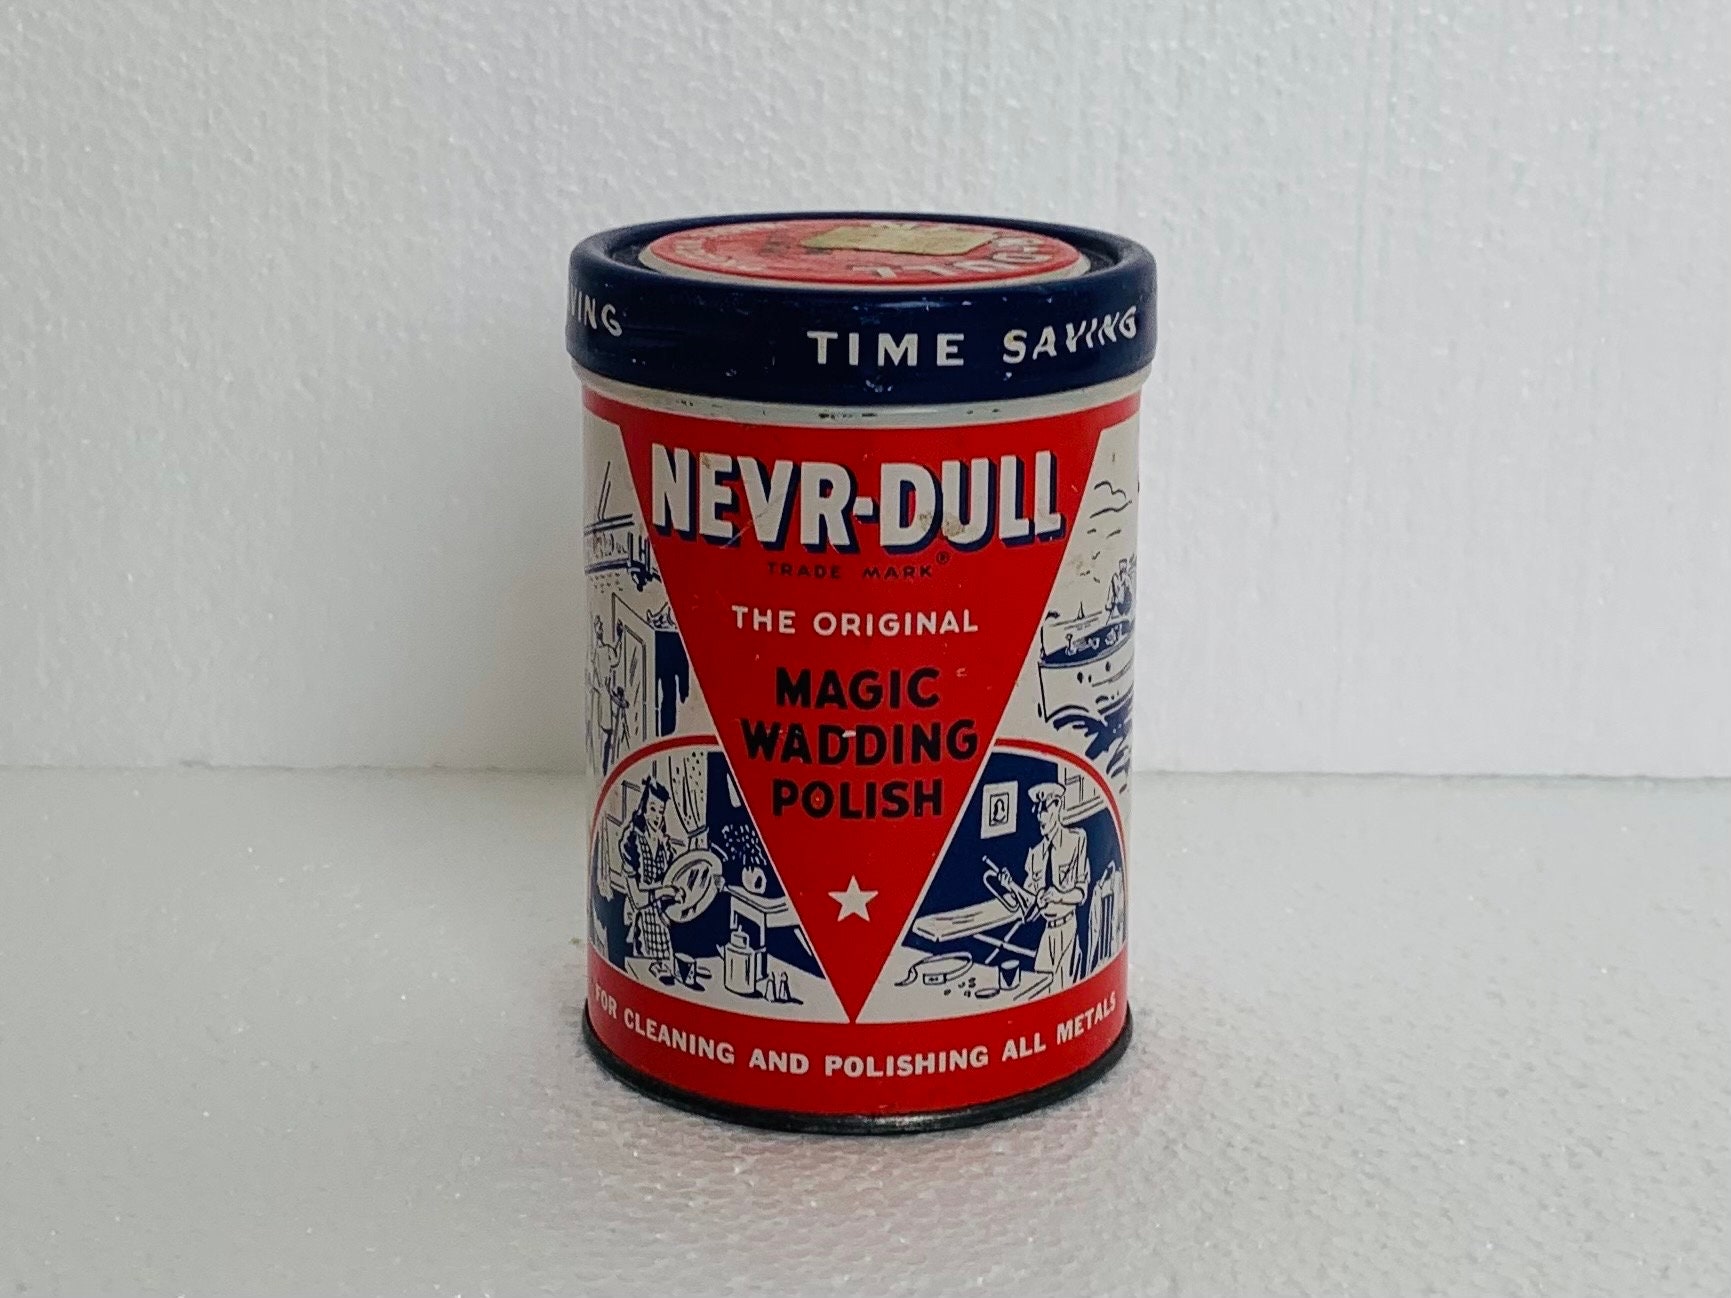 1941 VINTAGE NEVR-DULL NEVER-DULL Magic Wadding Polish Tin Can